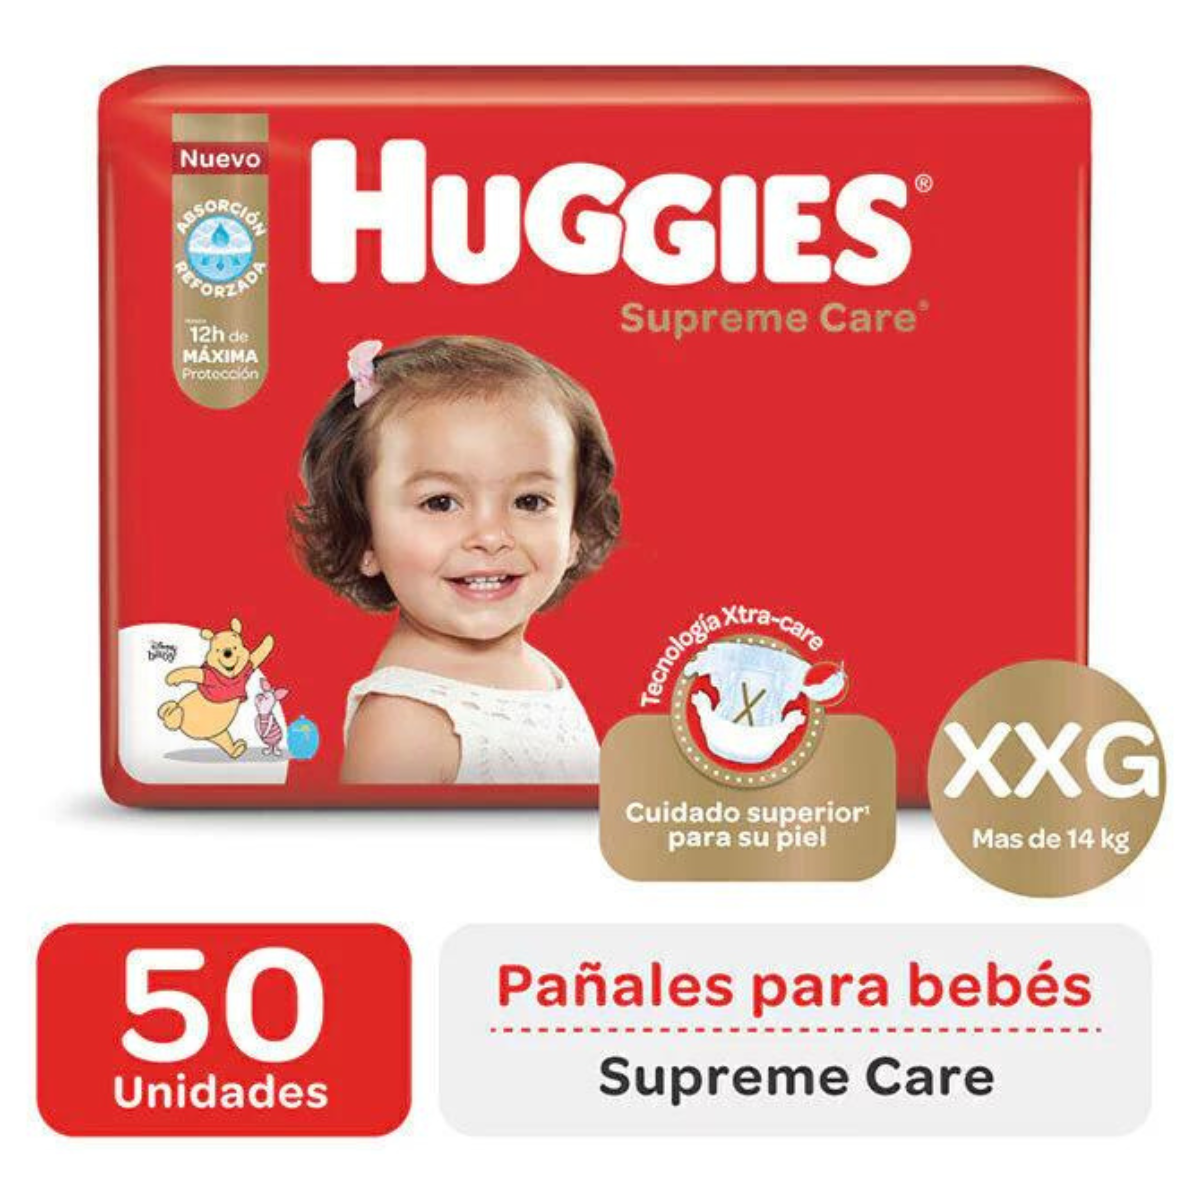 Imagen 1 de 2 de Pañales Huggies Supreme Care XXG x50 unidades